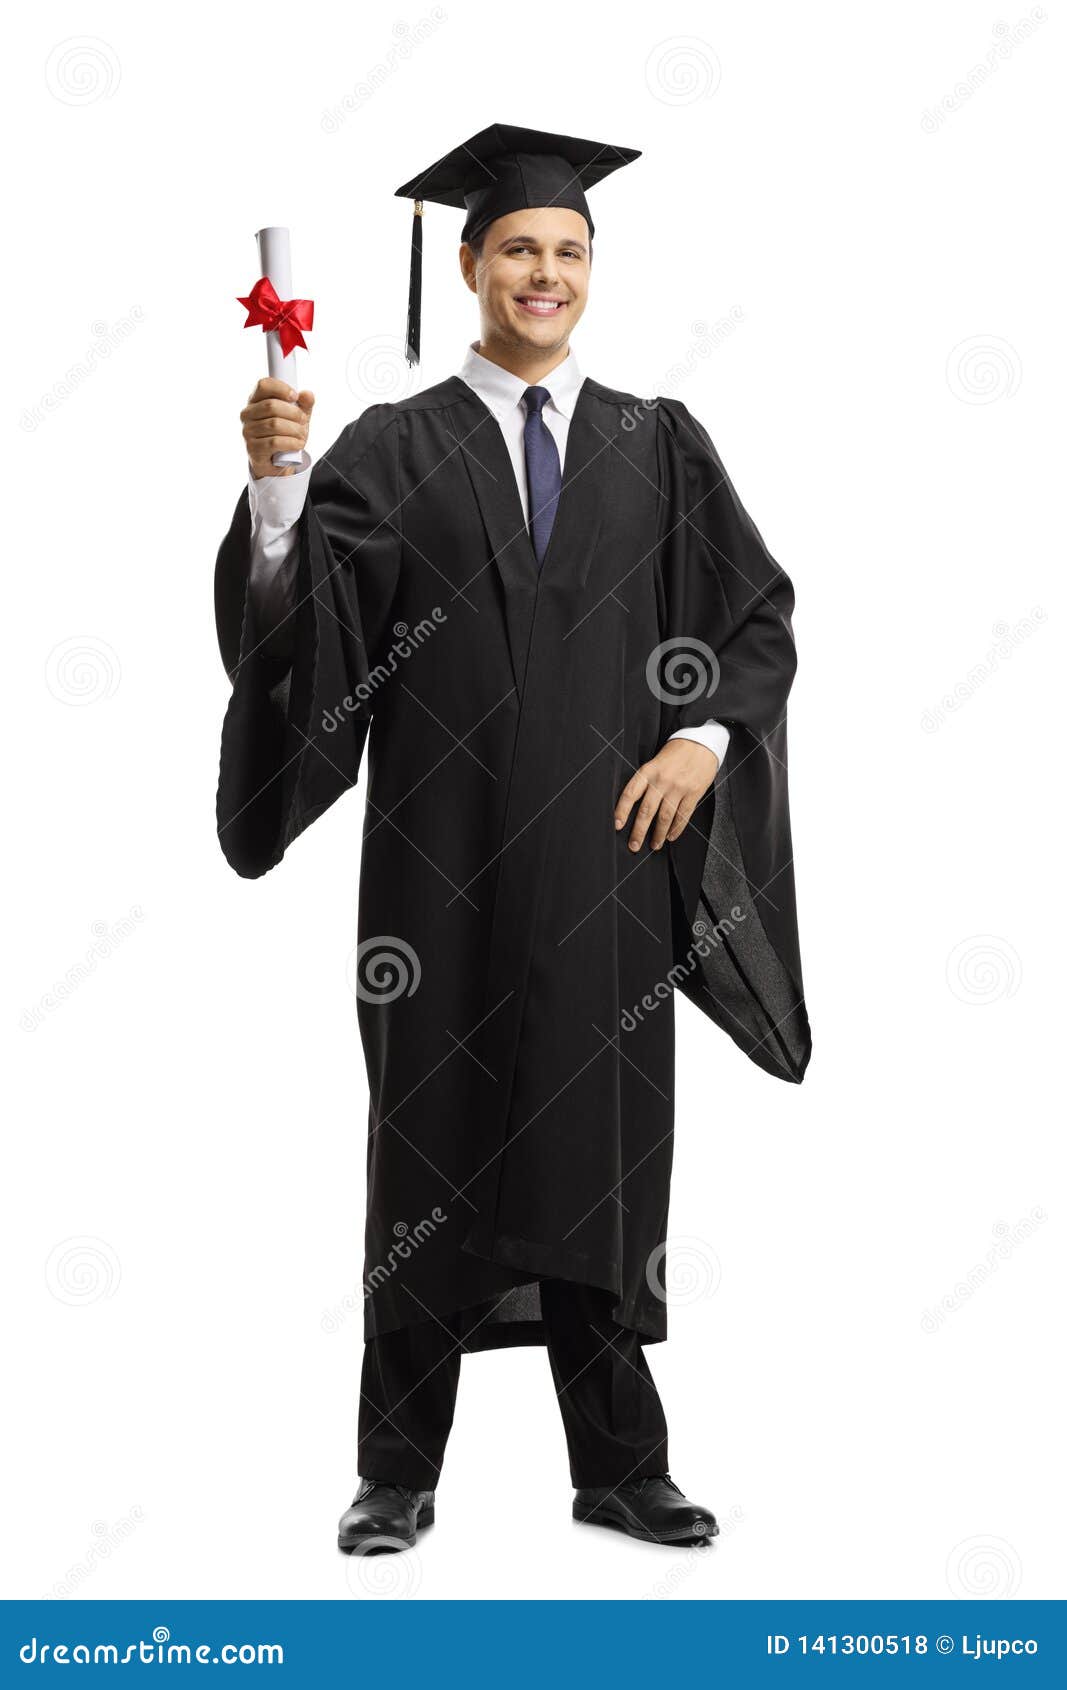 graduation gown length guys